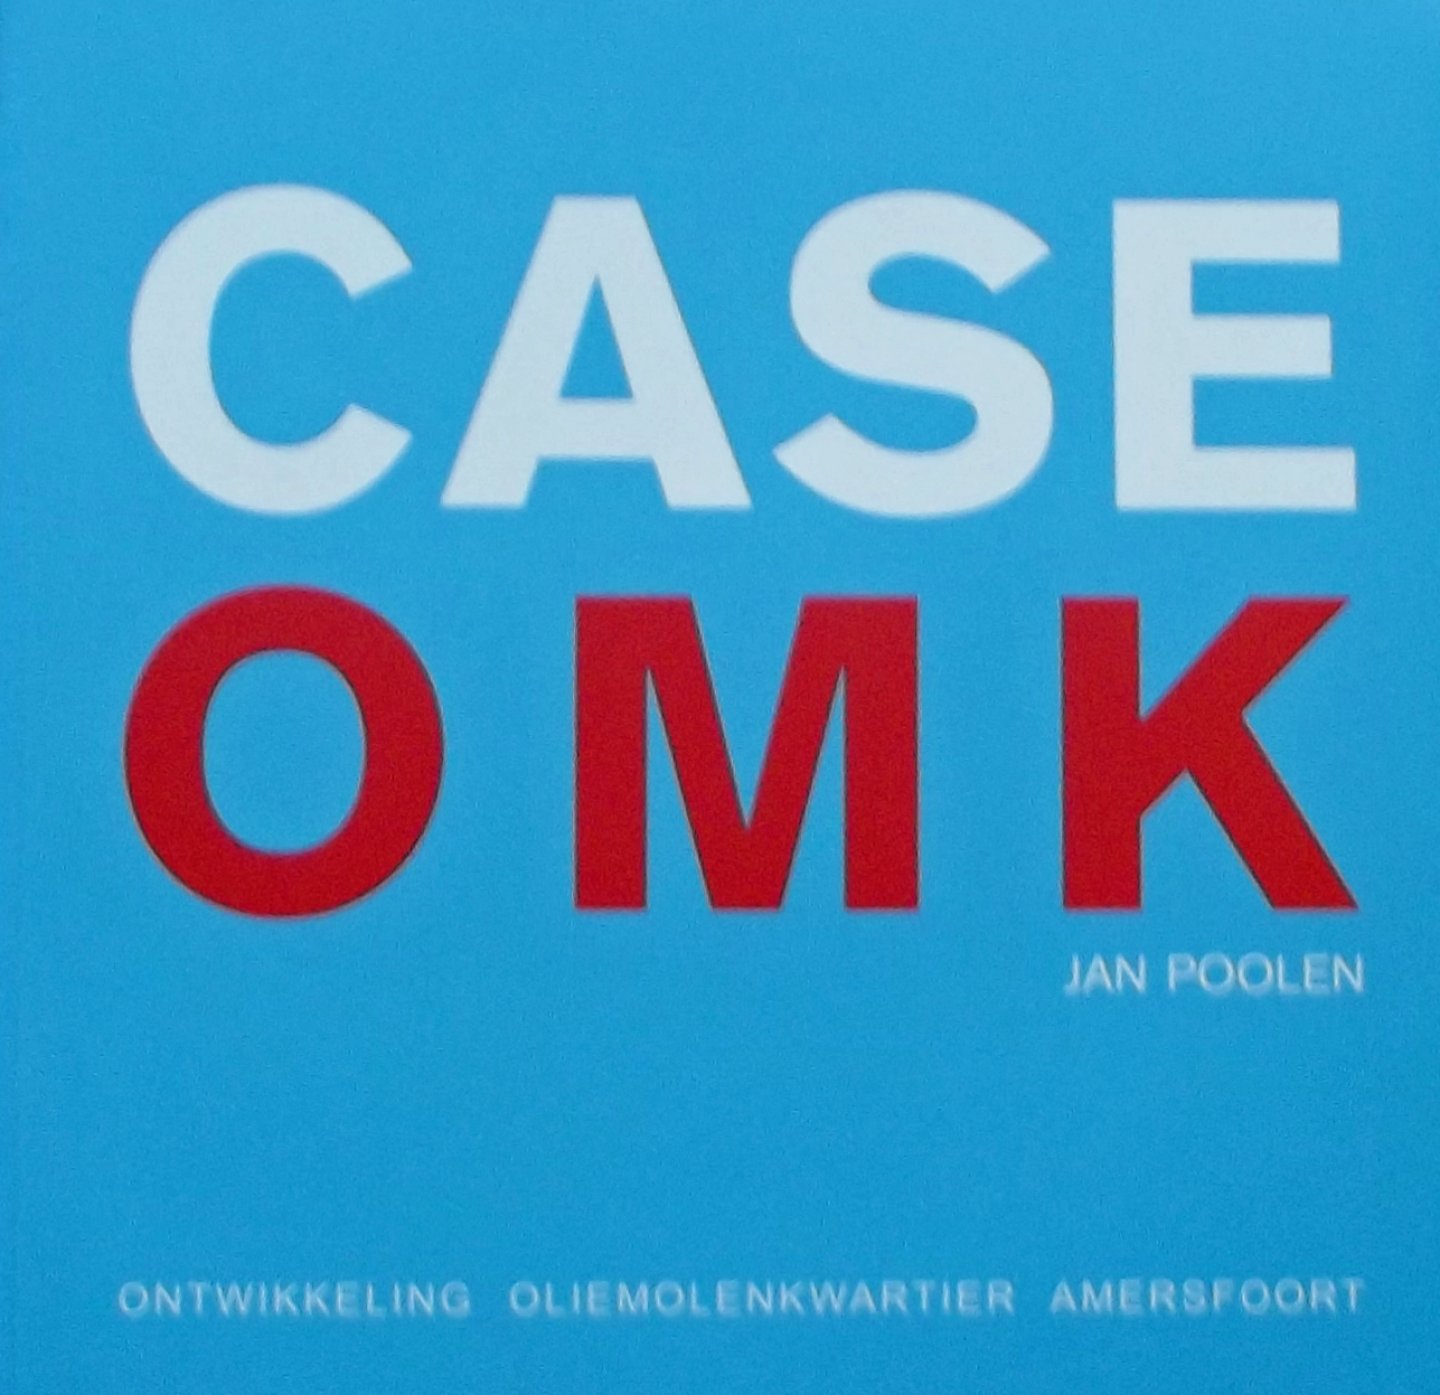 Poolen, Jan. - Case OMK, ontwikkeling Oliemolenkwartier Amersfoort.